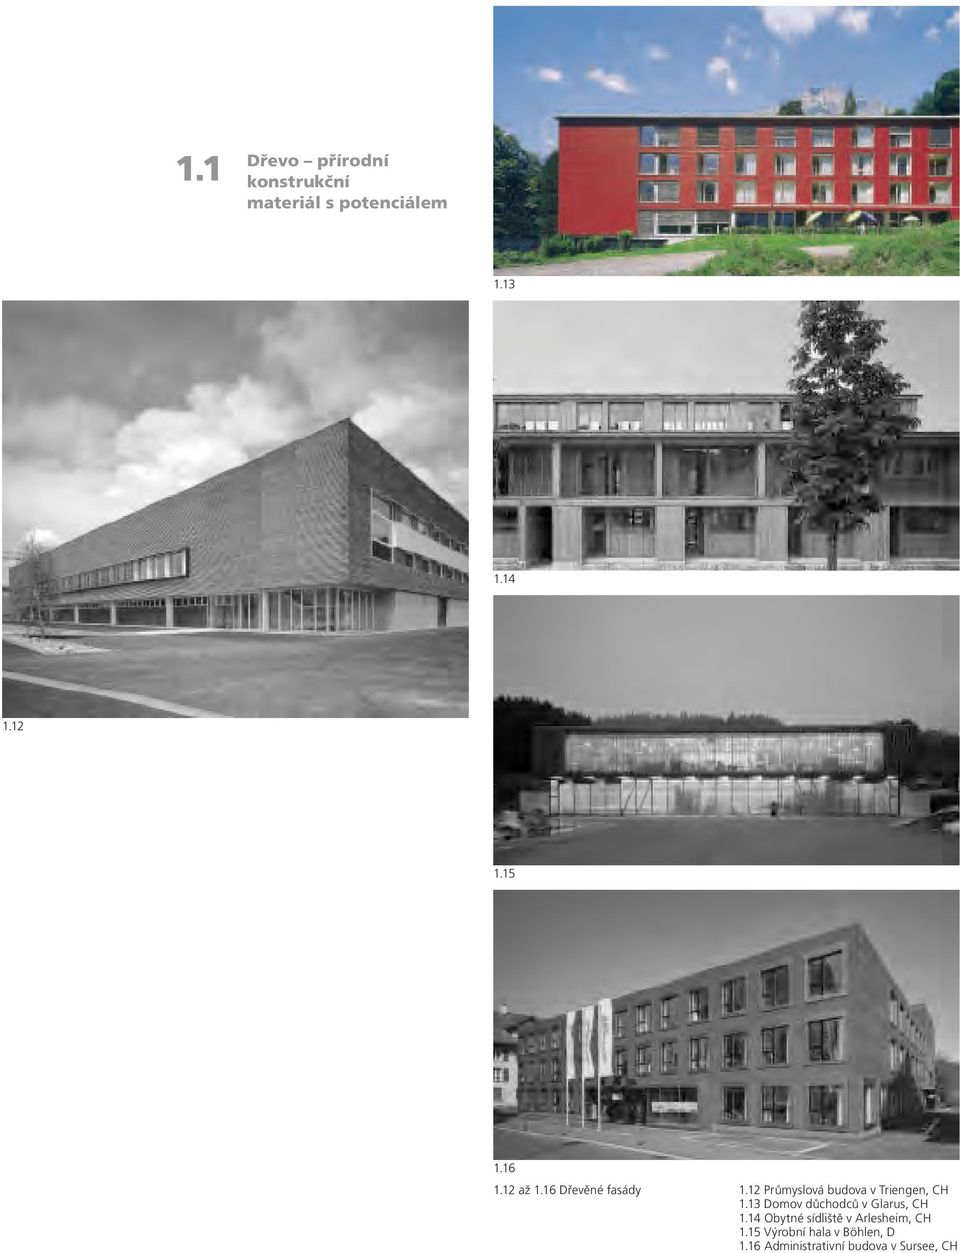 12 Průmyslová budova v Triengen, CH 1.13 Domov důchodců v Glarus, CH 1.